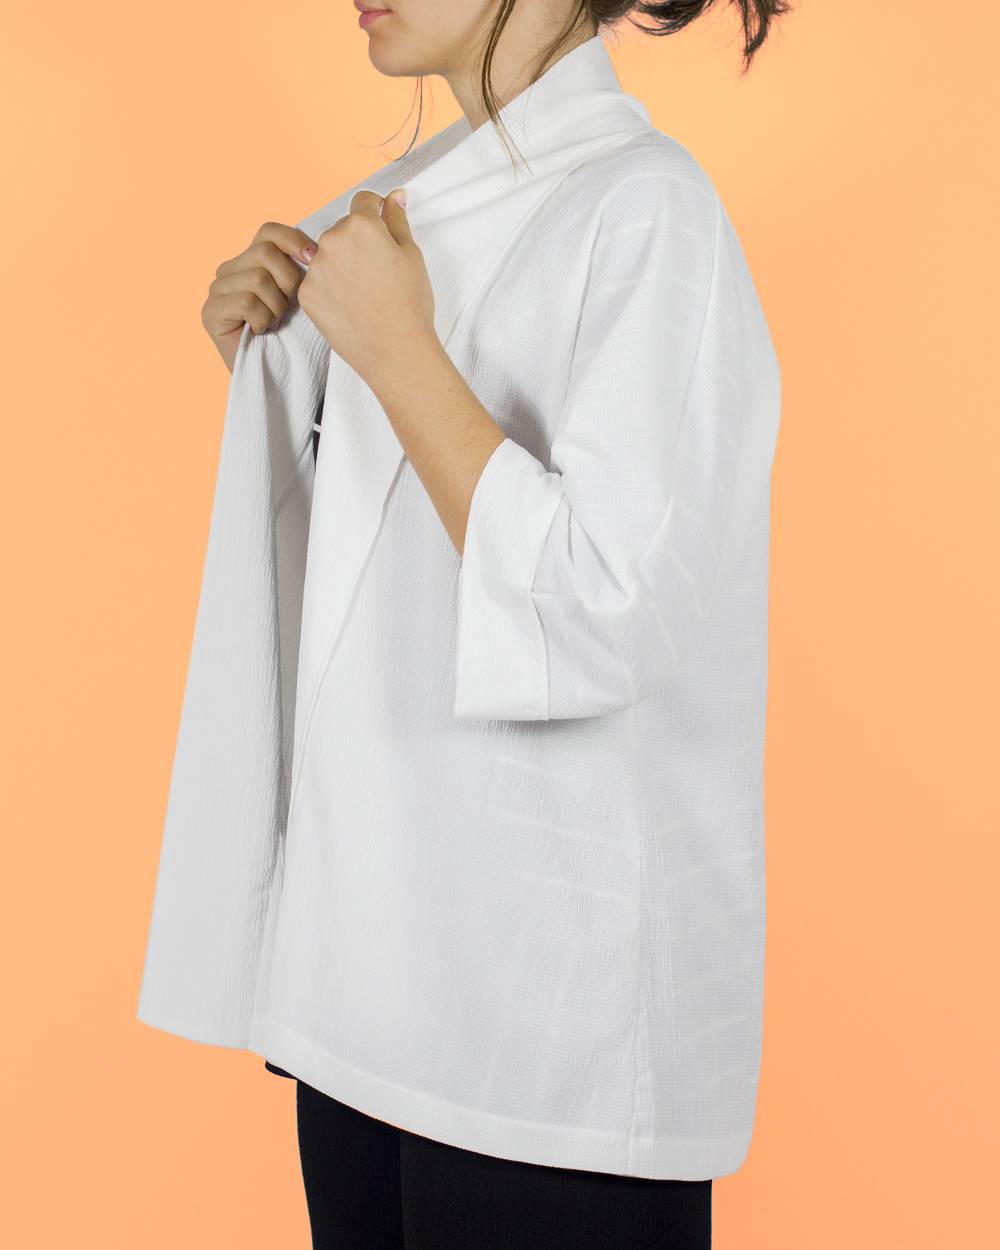 Jaqueta kimono blanc.